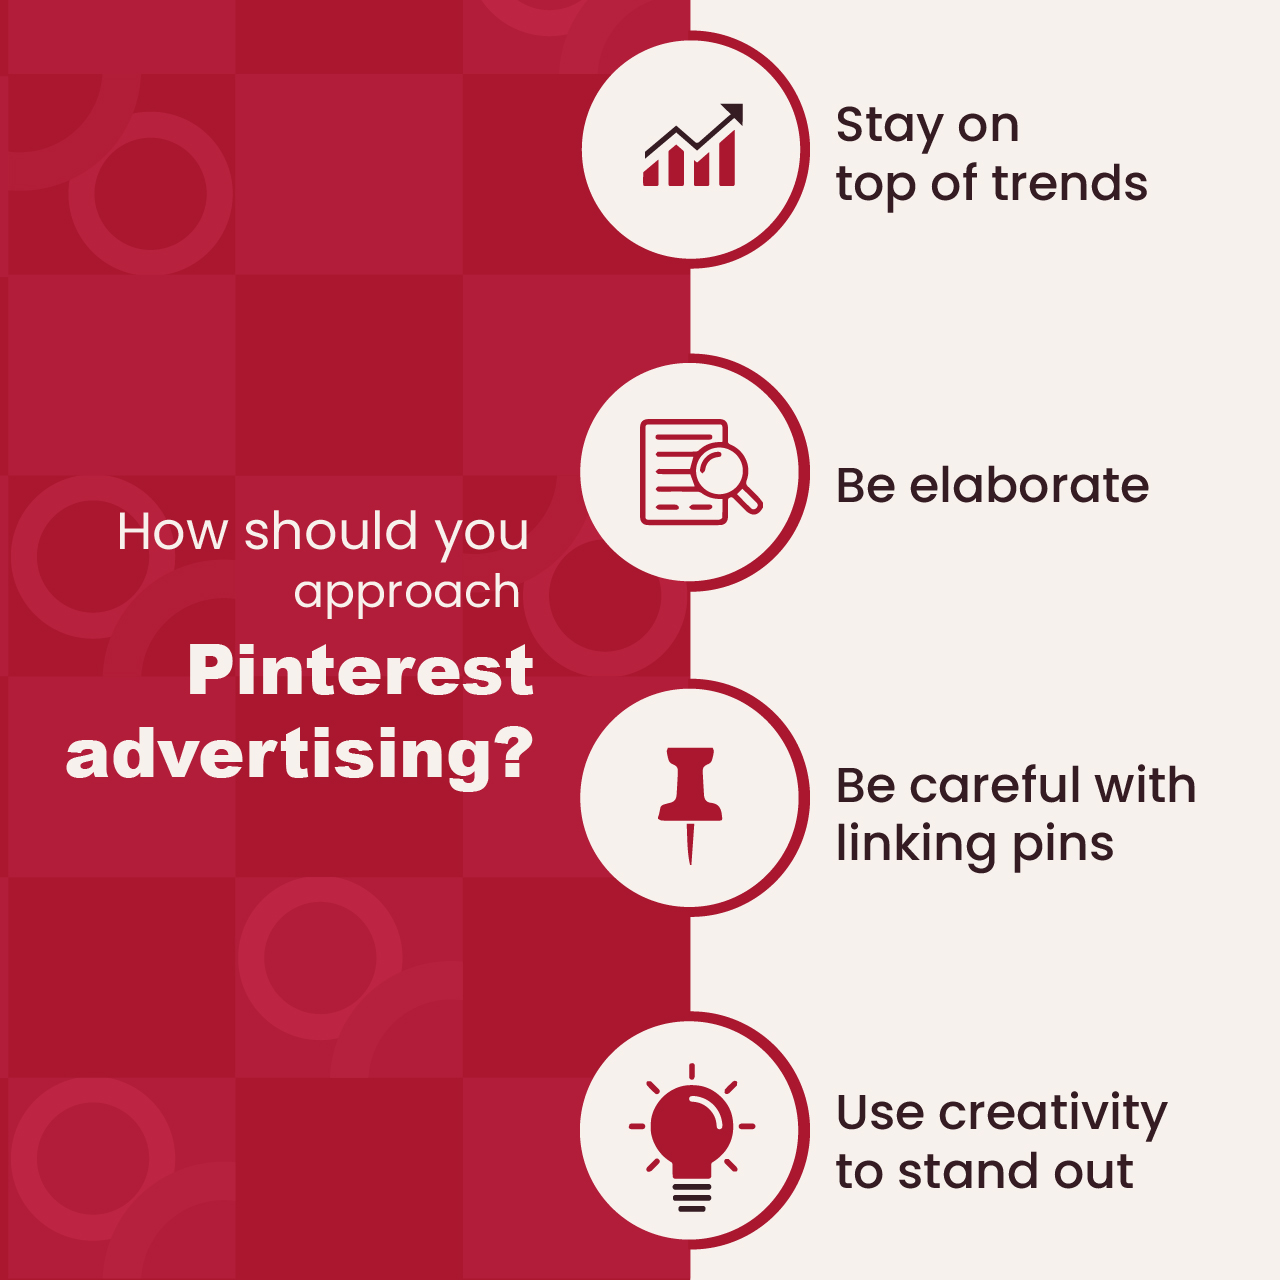 Pinterest advertising best practices